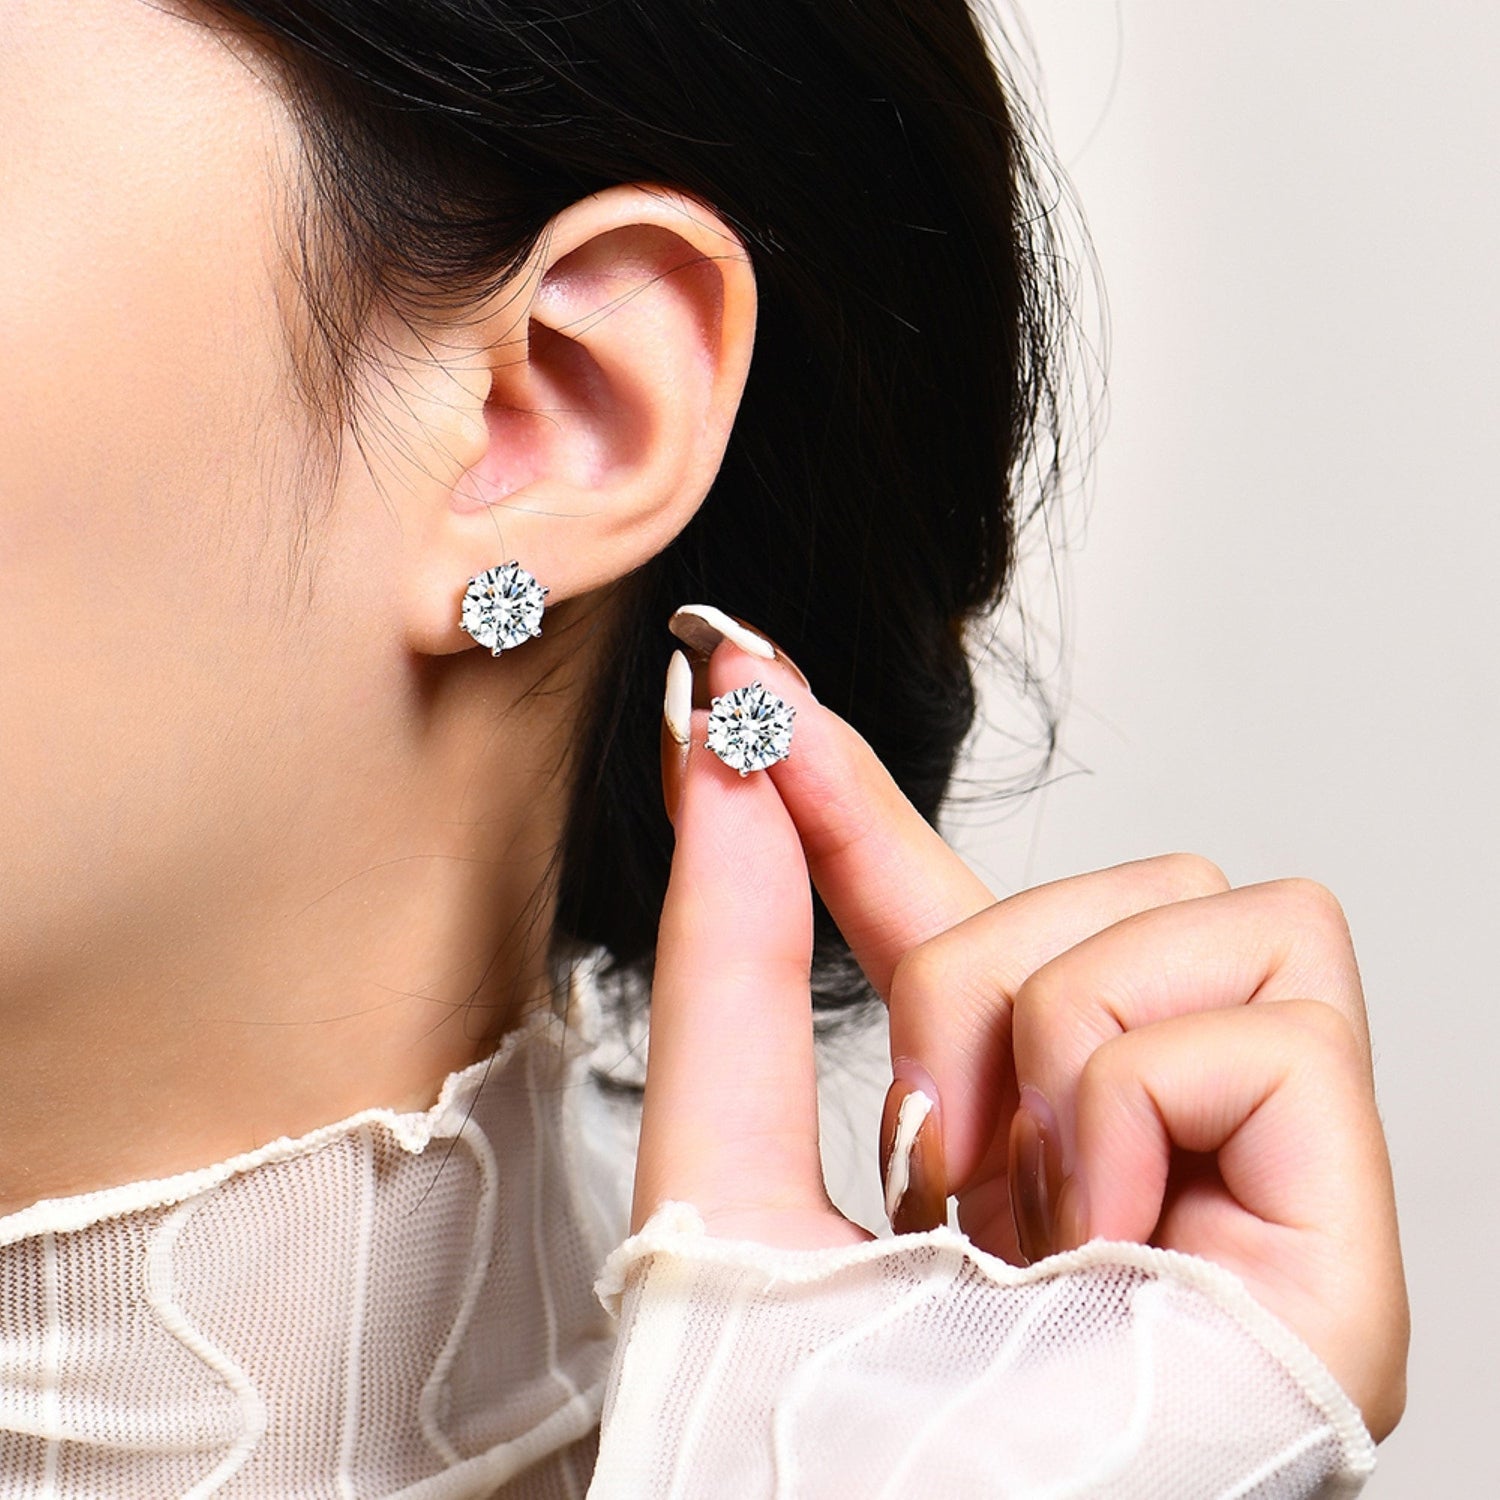 Moissanite Earring Studs 3ct, Solid 925 Sterling Silver Earrings